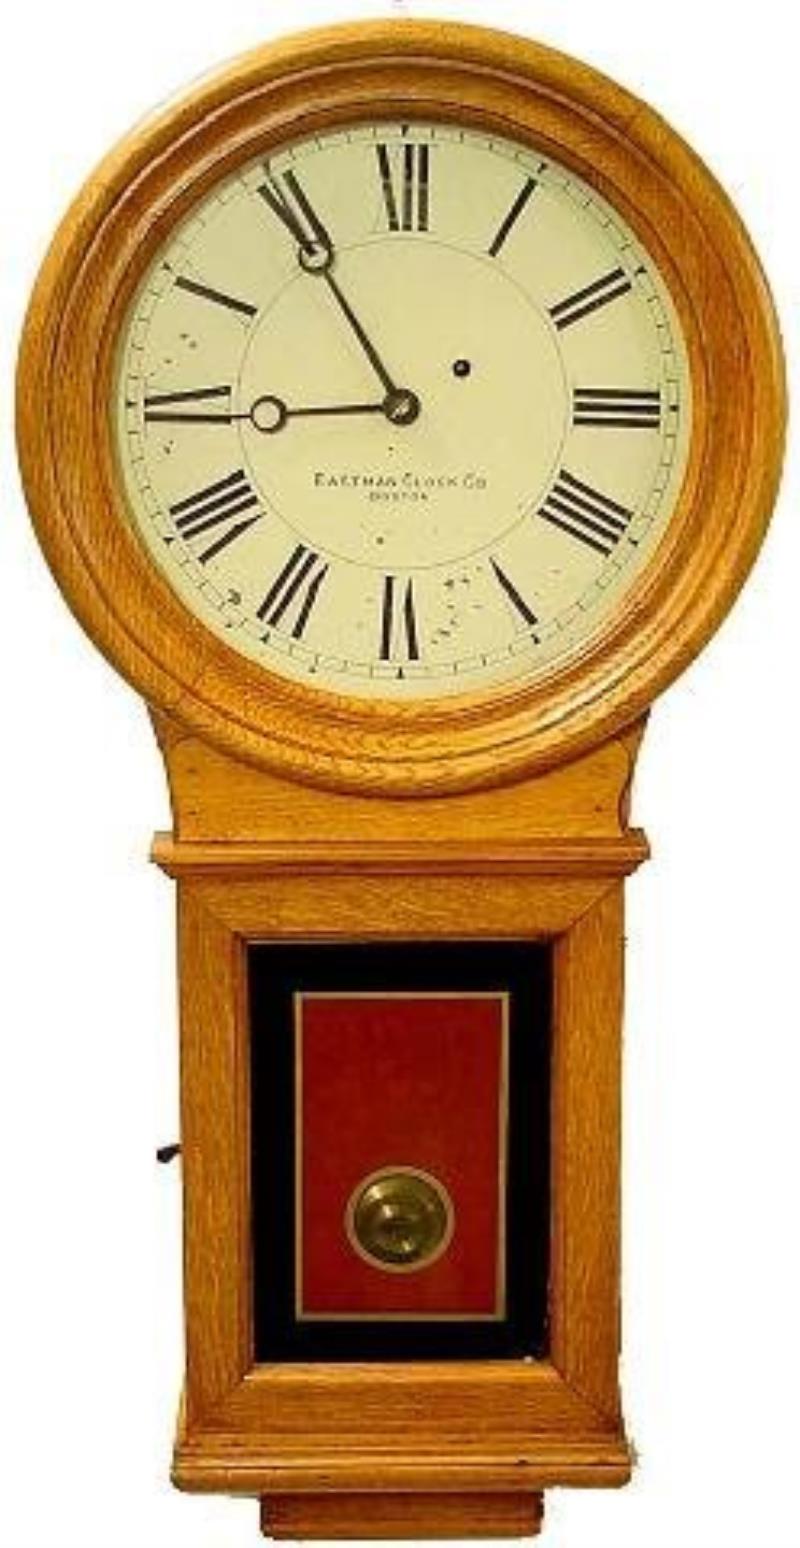 Eastman Clock Co. Boston Wall Clock